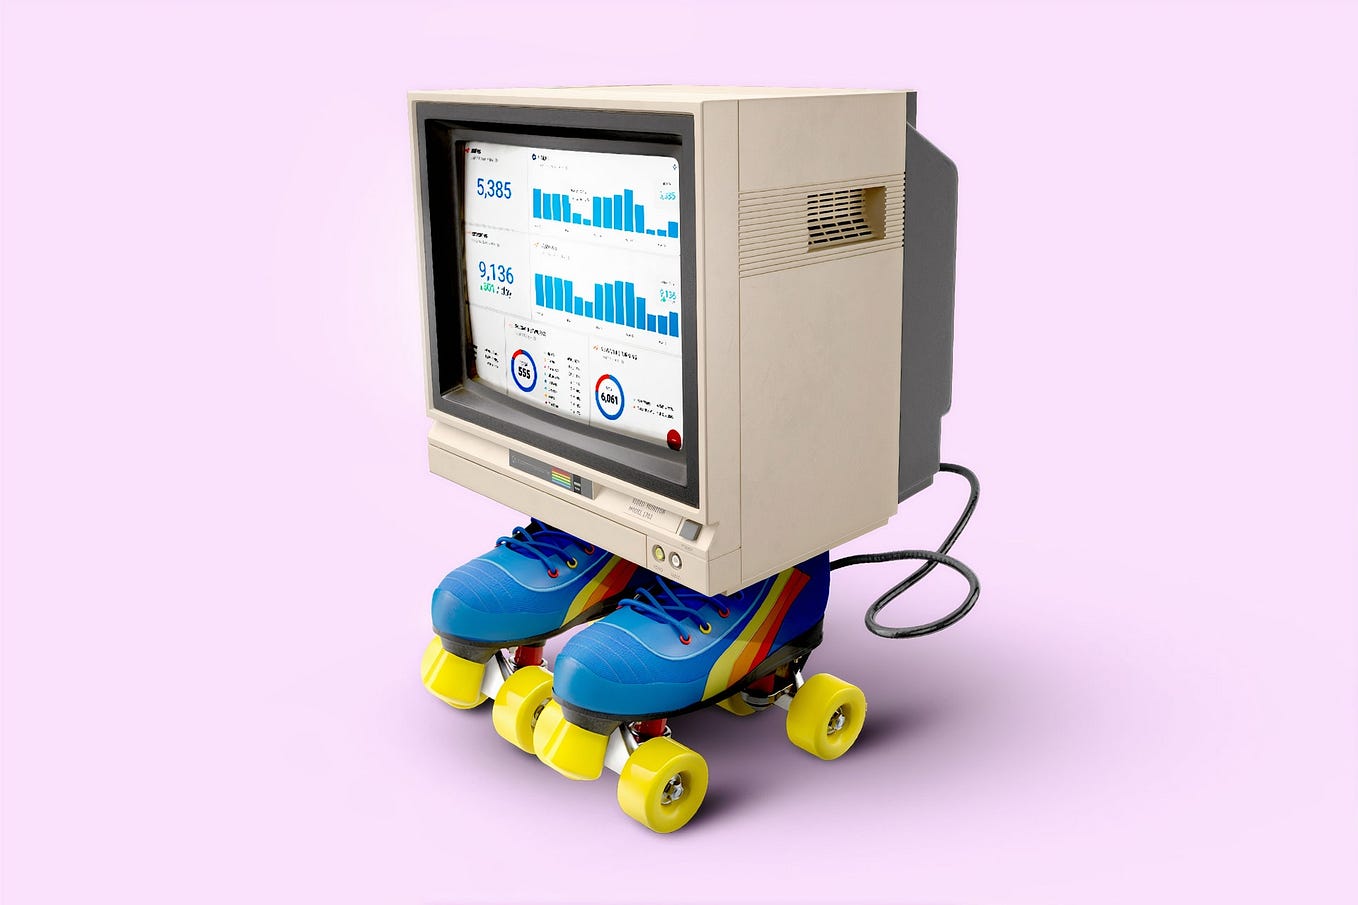 Retro computer with skates